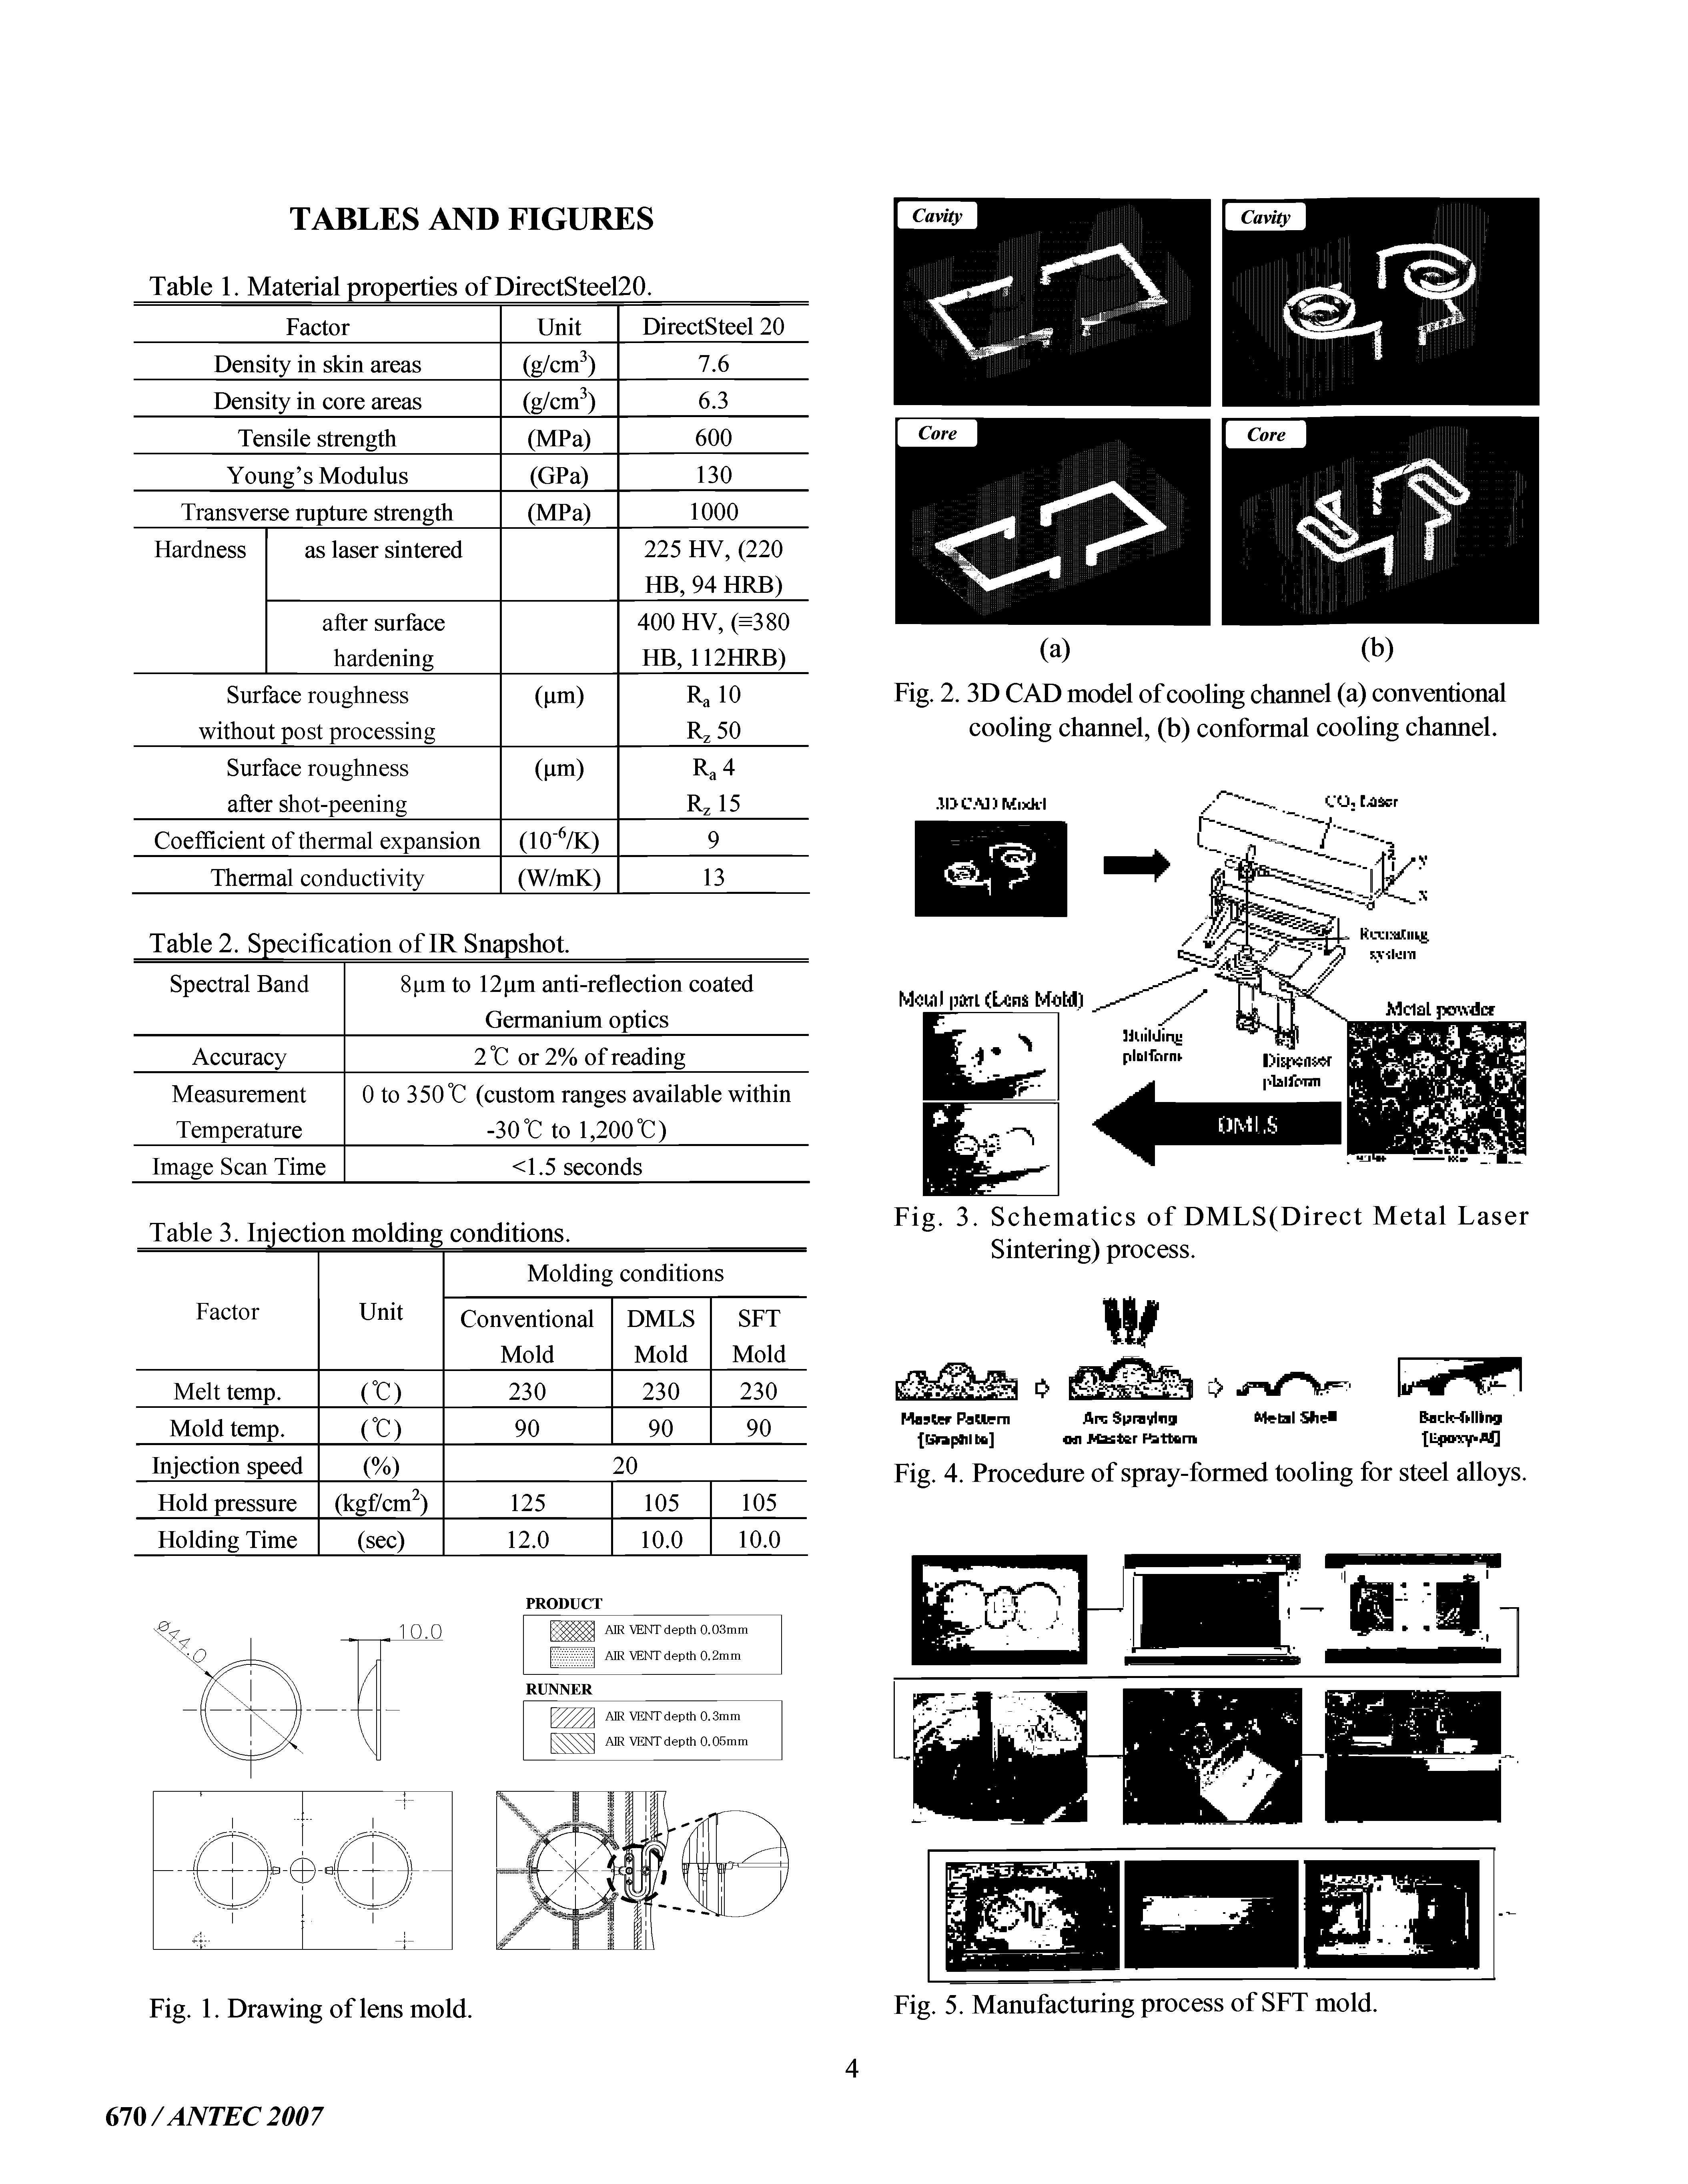 Fig. 3. Schematics of DMLS(Direct Metal Laser Sintering) process.